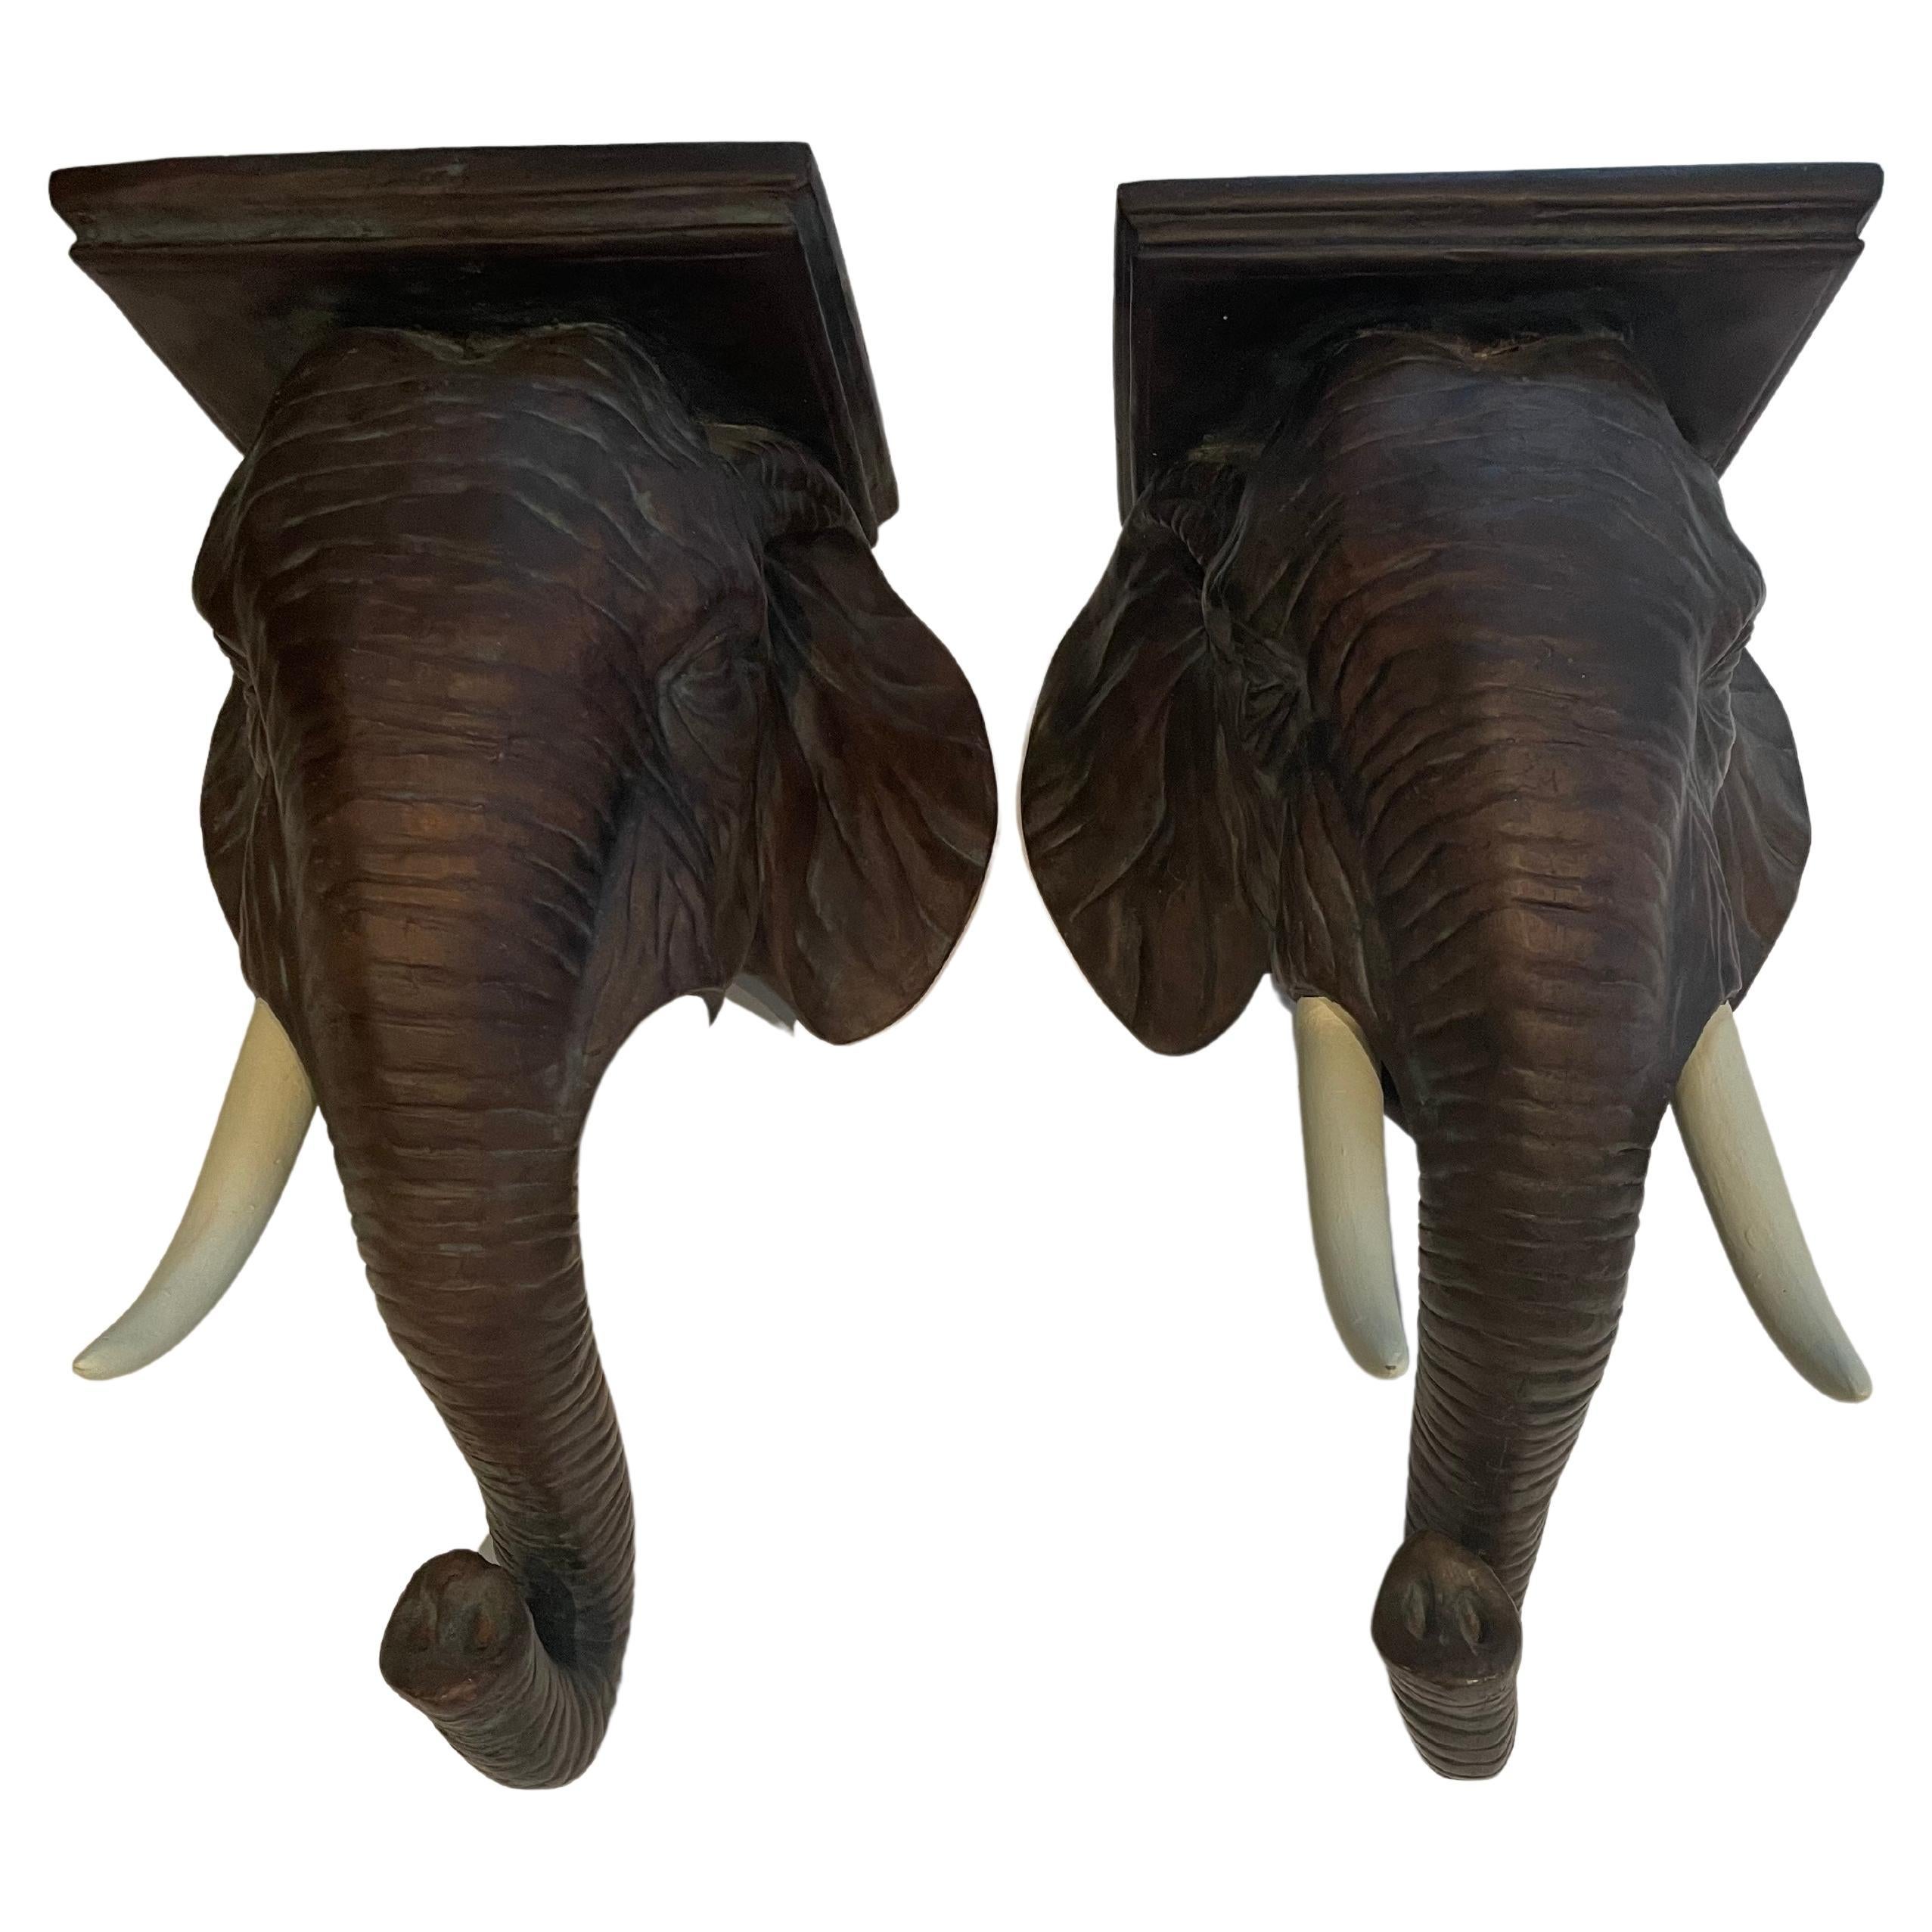 Sensational Pair of Sculptural Elephant Form Wall Brackets For Sale